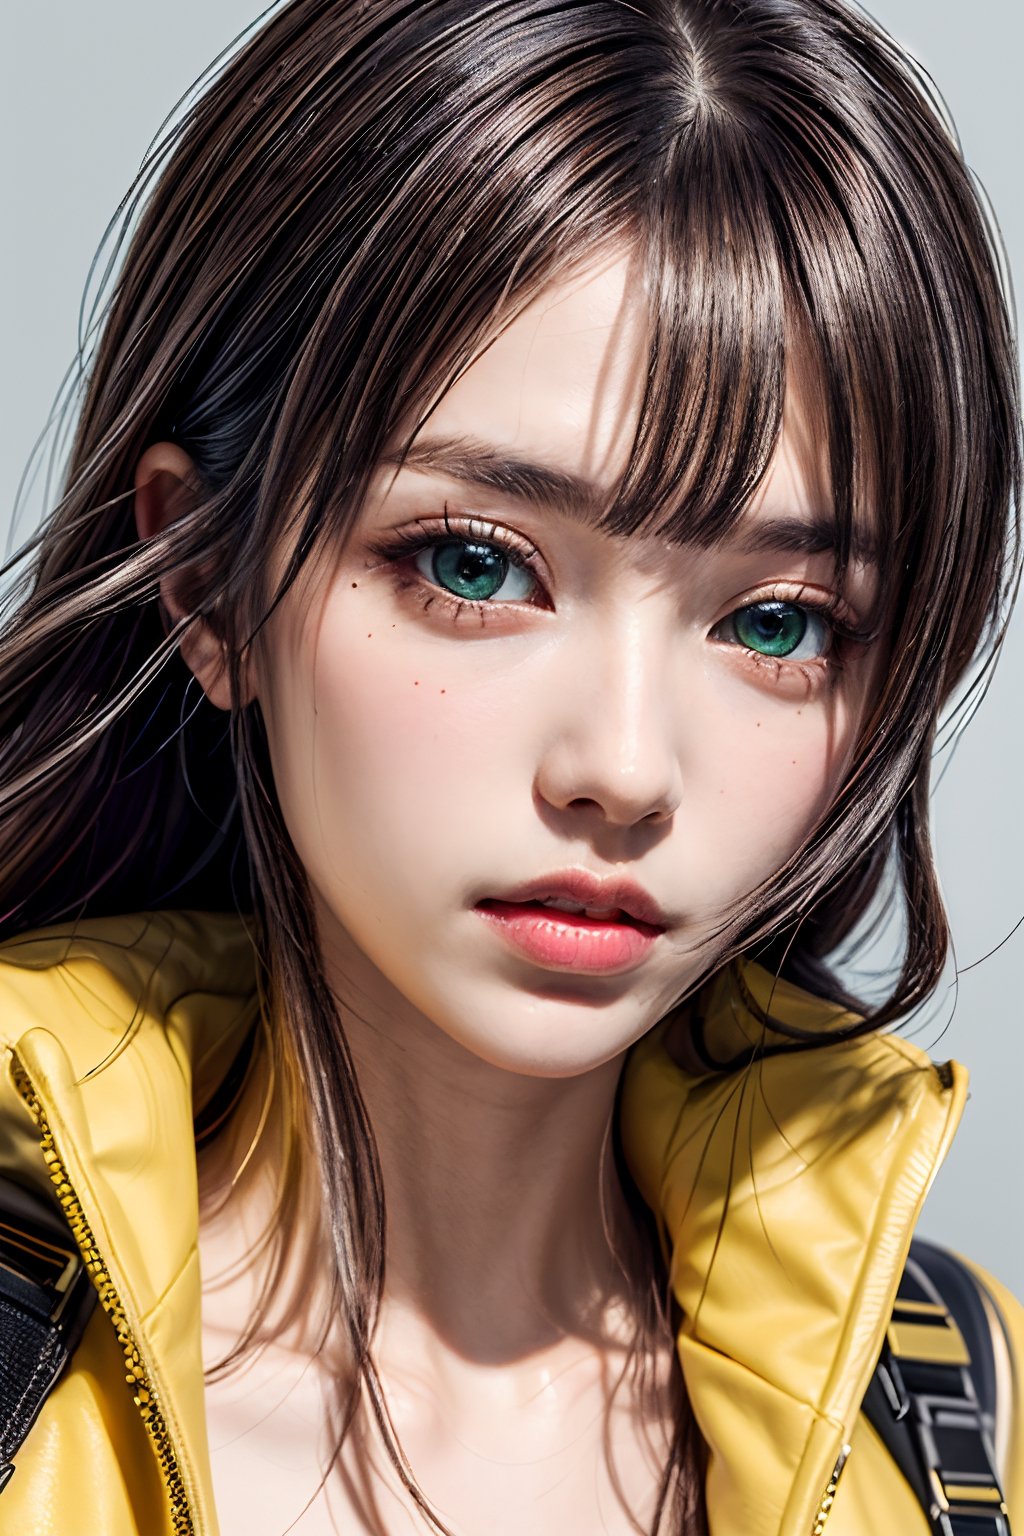  1 Girl, brown long hair, brown eye, yellow coat, green sneakers, close up, ,photo of perfecteyes eyes, 169cm, 49kg,who,raiden shogun